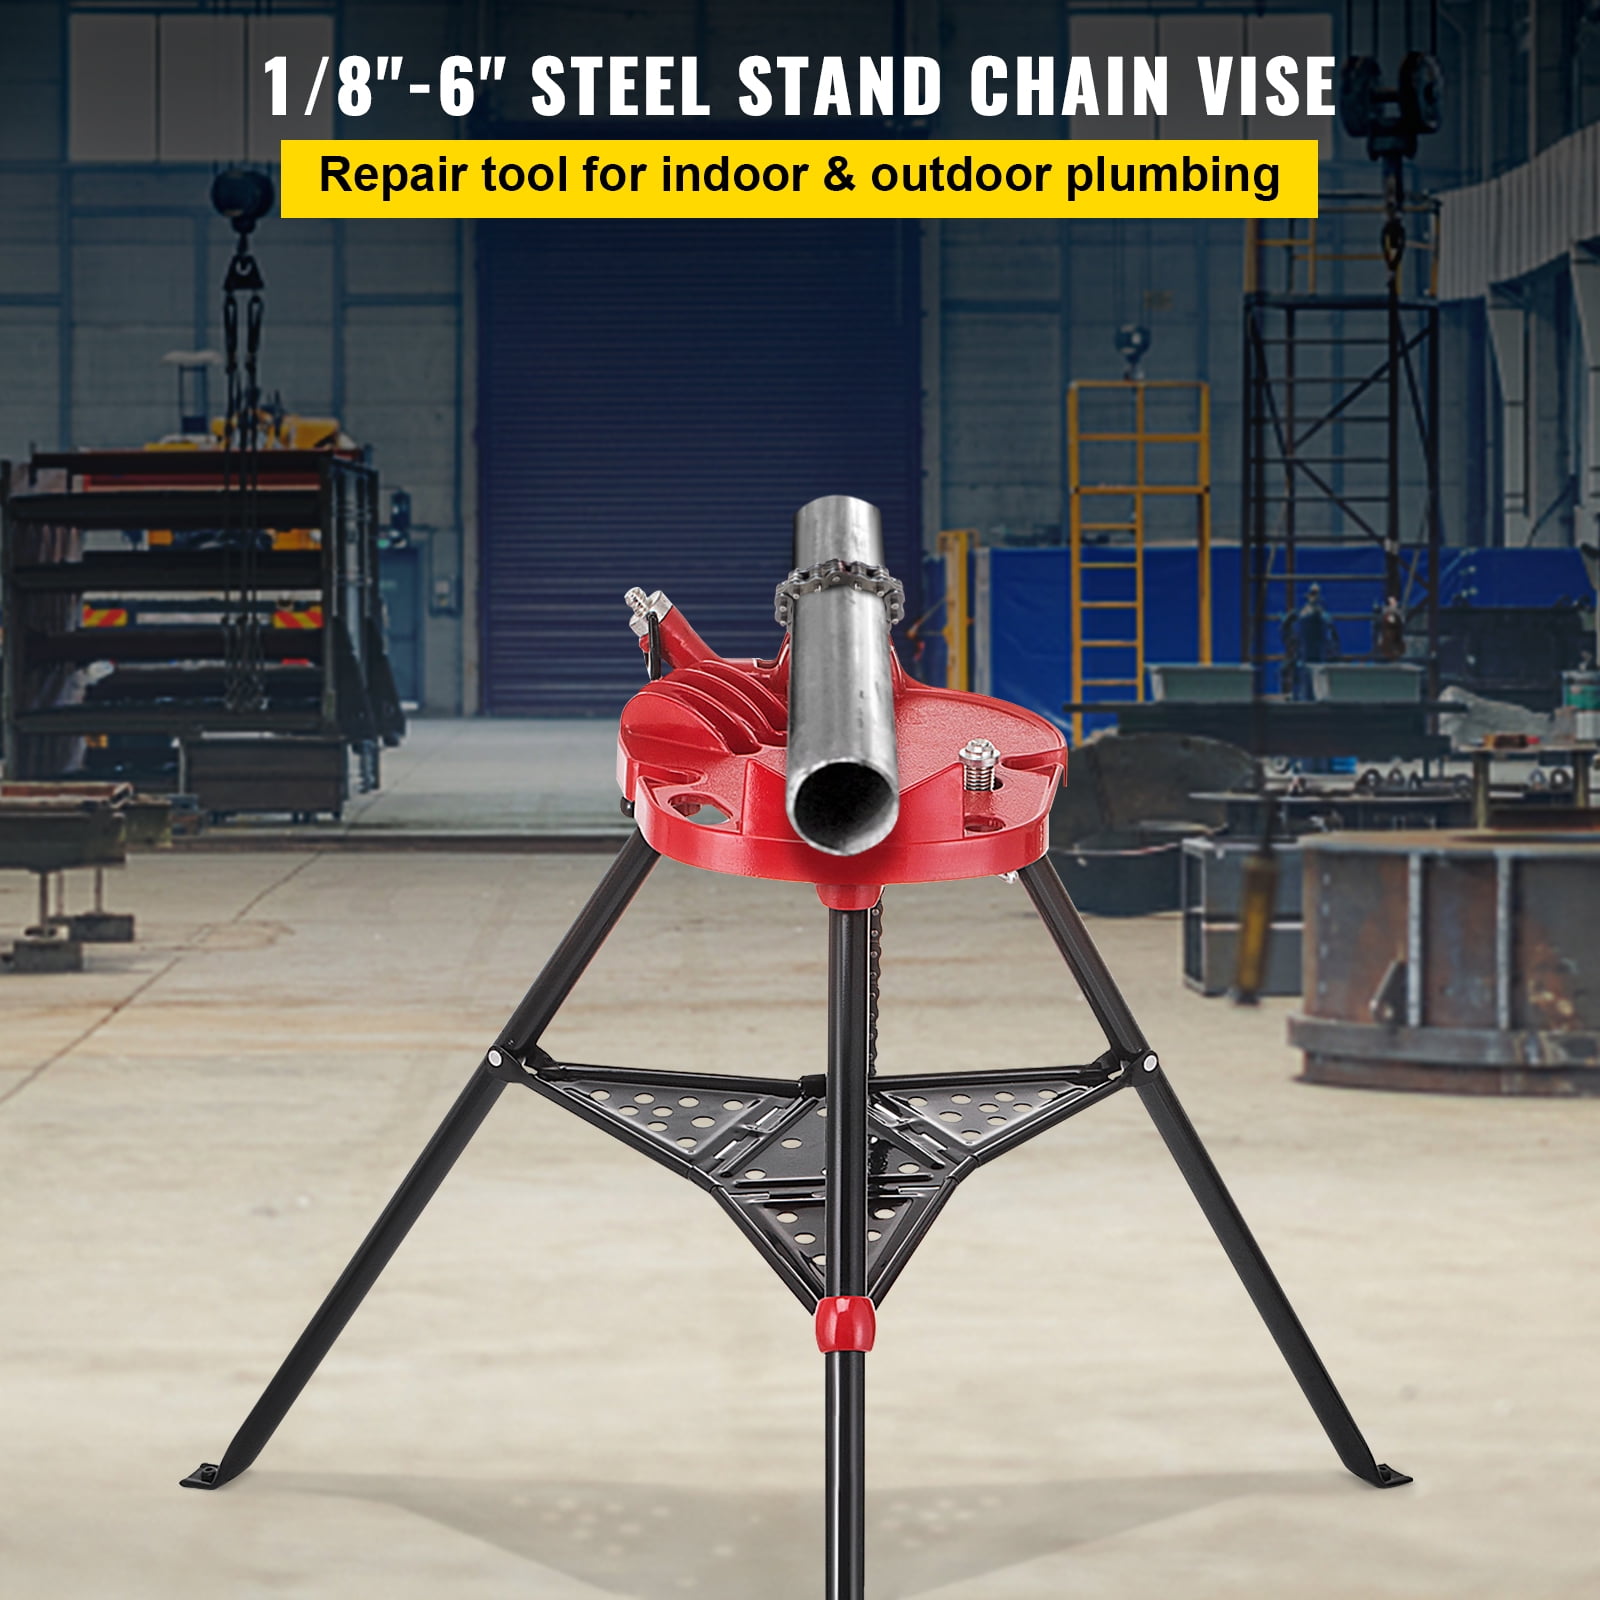 460 6" Tripod Pipe Chain Vise Stand w/ Steel Legs & Rubber Mounts. 